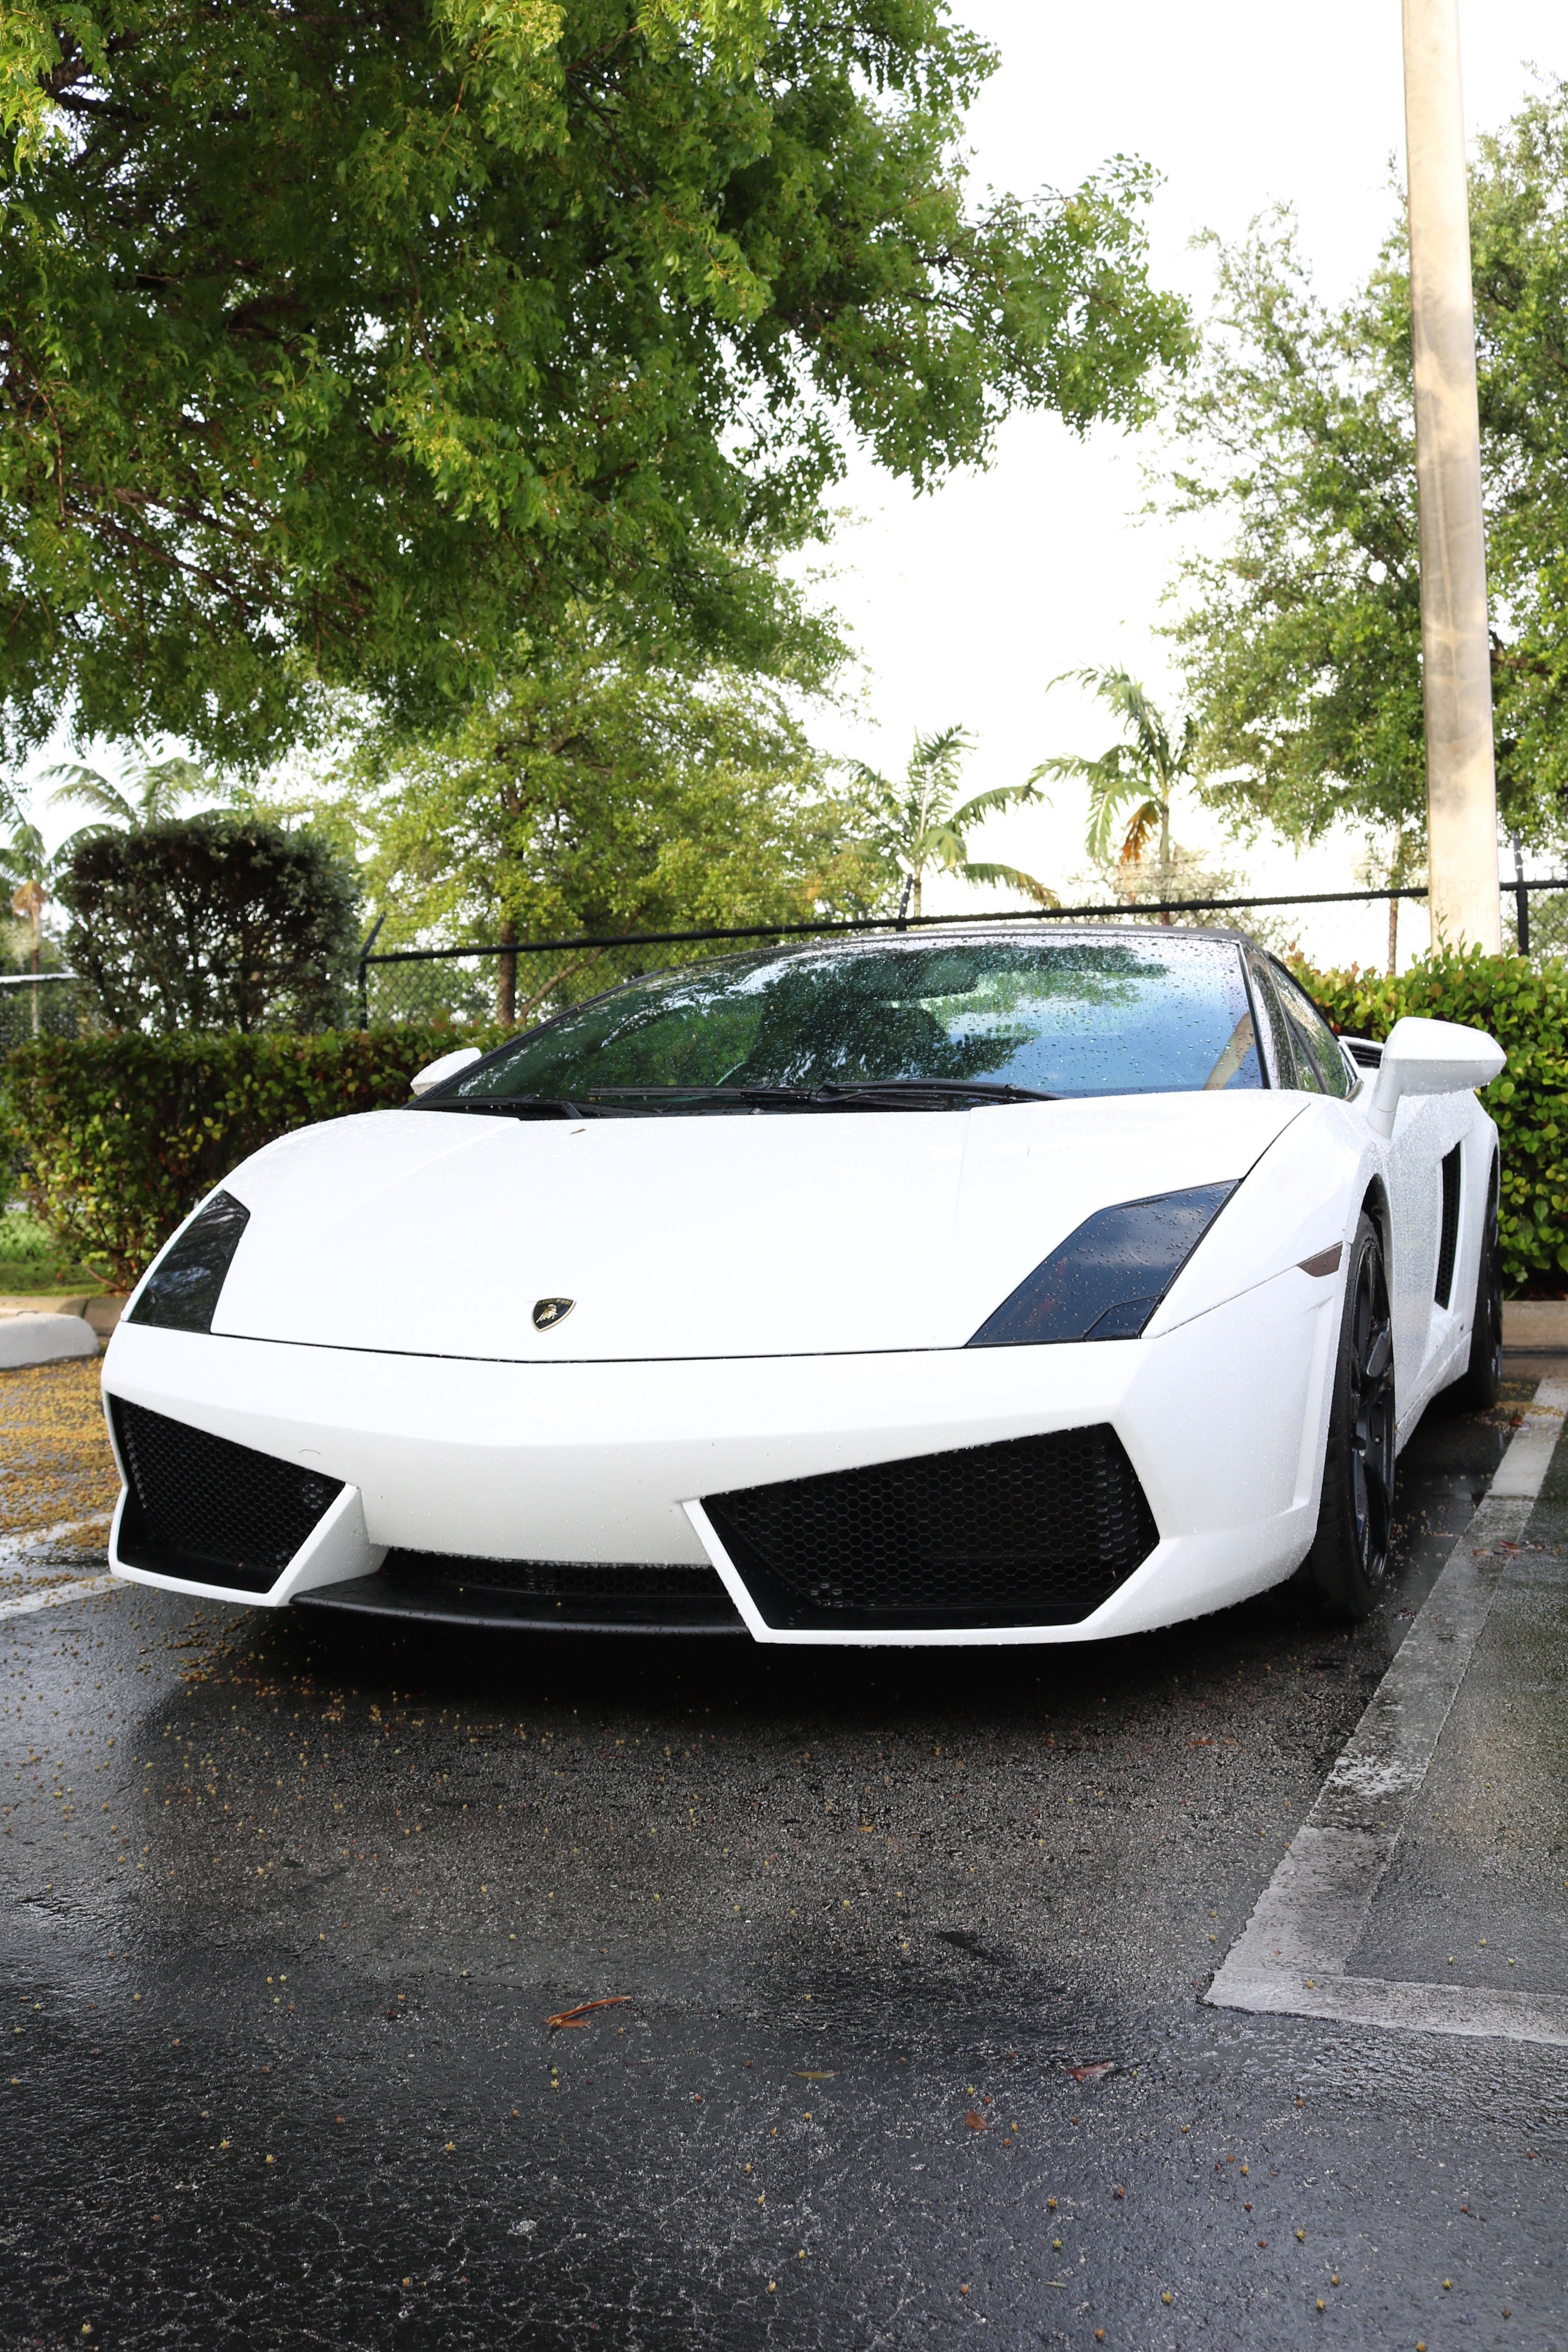 MPH Club Luxury Transportation Concierge in Florida - The Luxury